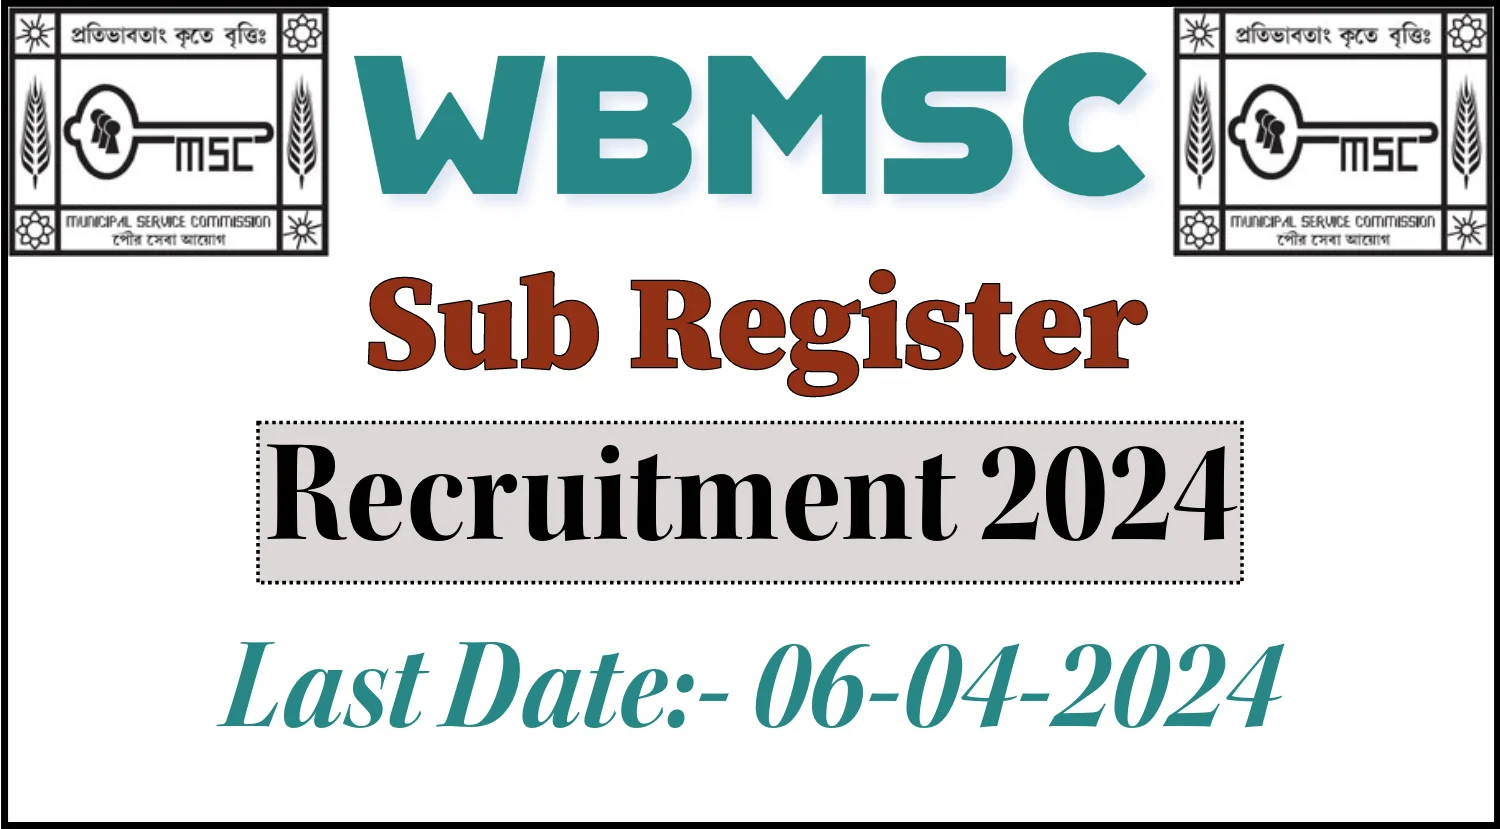 WBMSC Sub Register Recruitment 2024 Apply Now